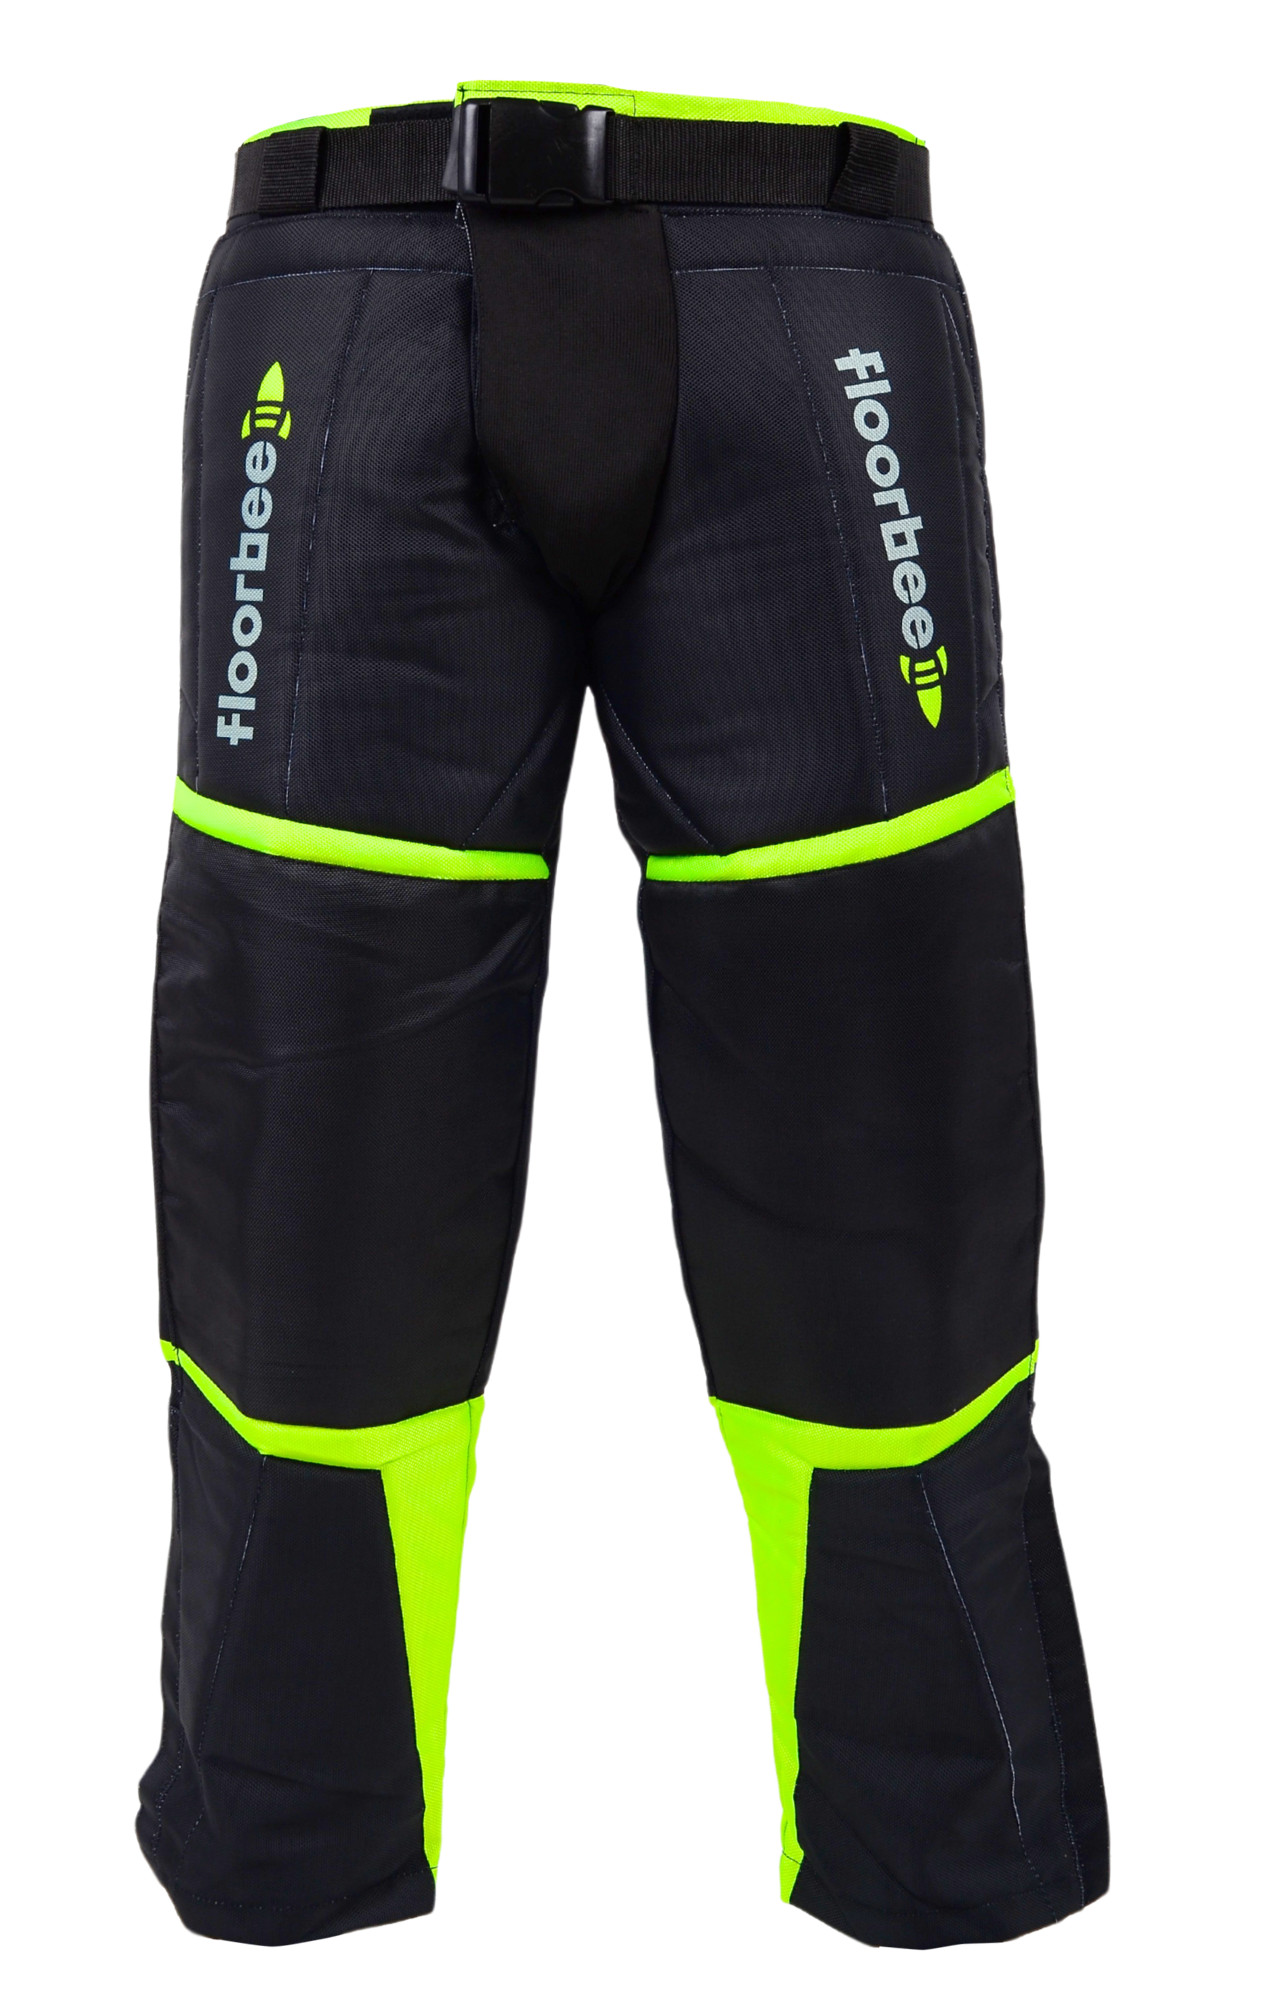 FLOORBEE Goalie Armor Pants 3.0 - black/yellow 152 cm, černá / žlutá